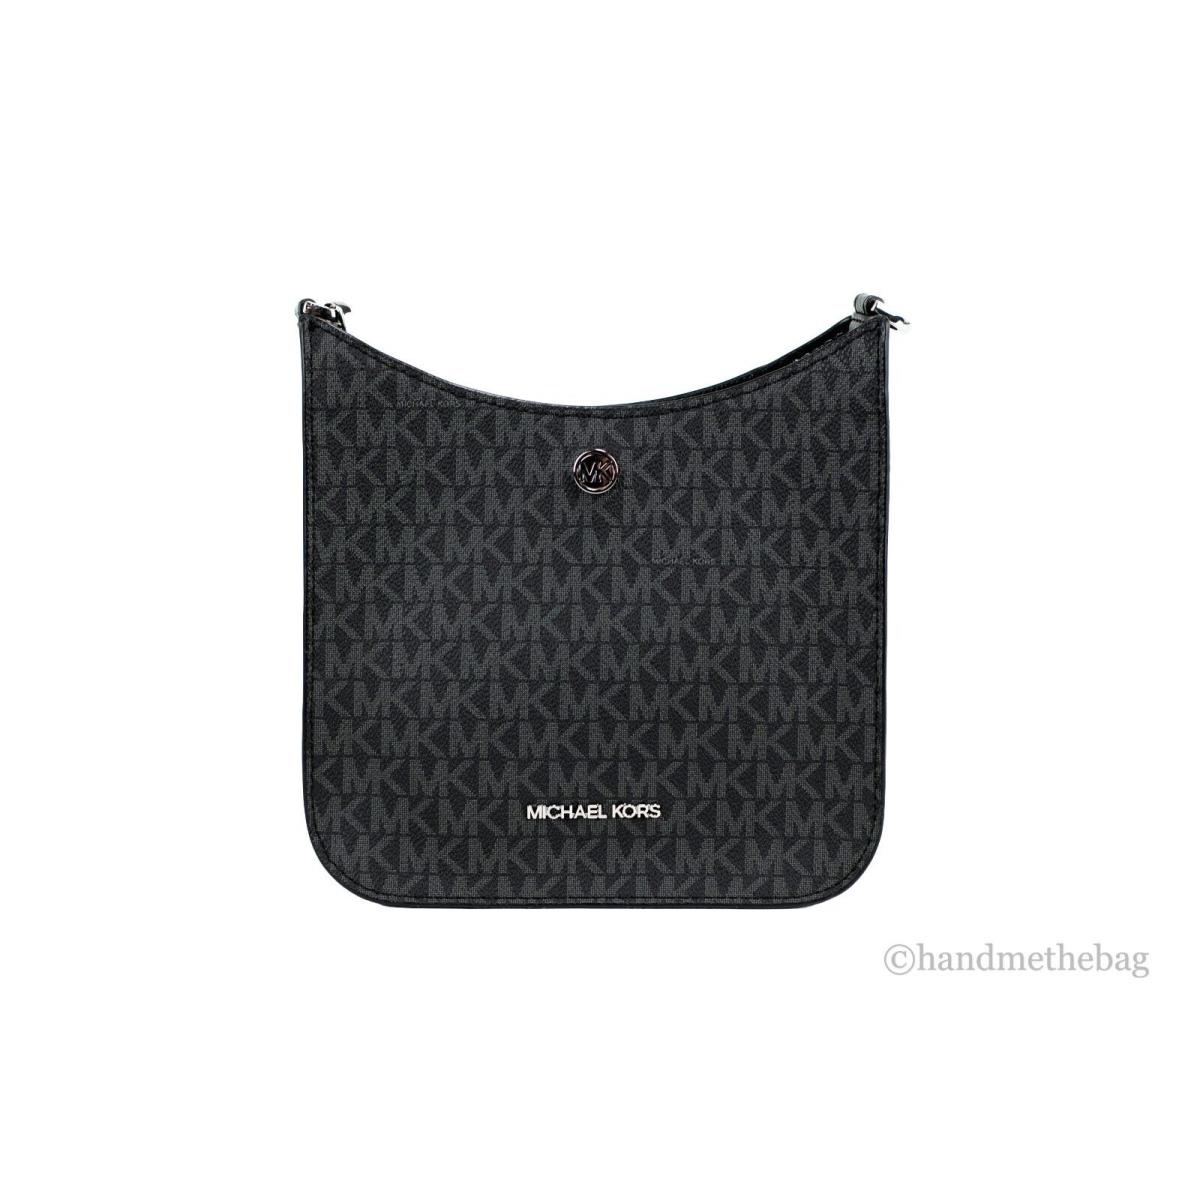 Michael Kors Briley Small Leather Pvc Canvas Messenger Crossbody Handbag Purse Black Signature